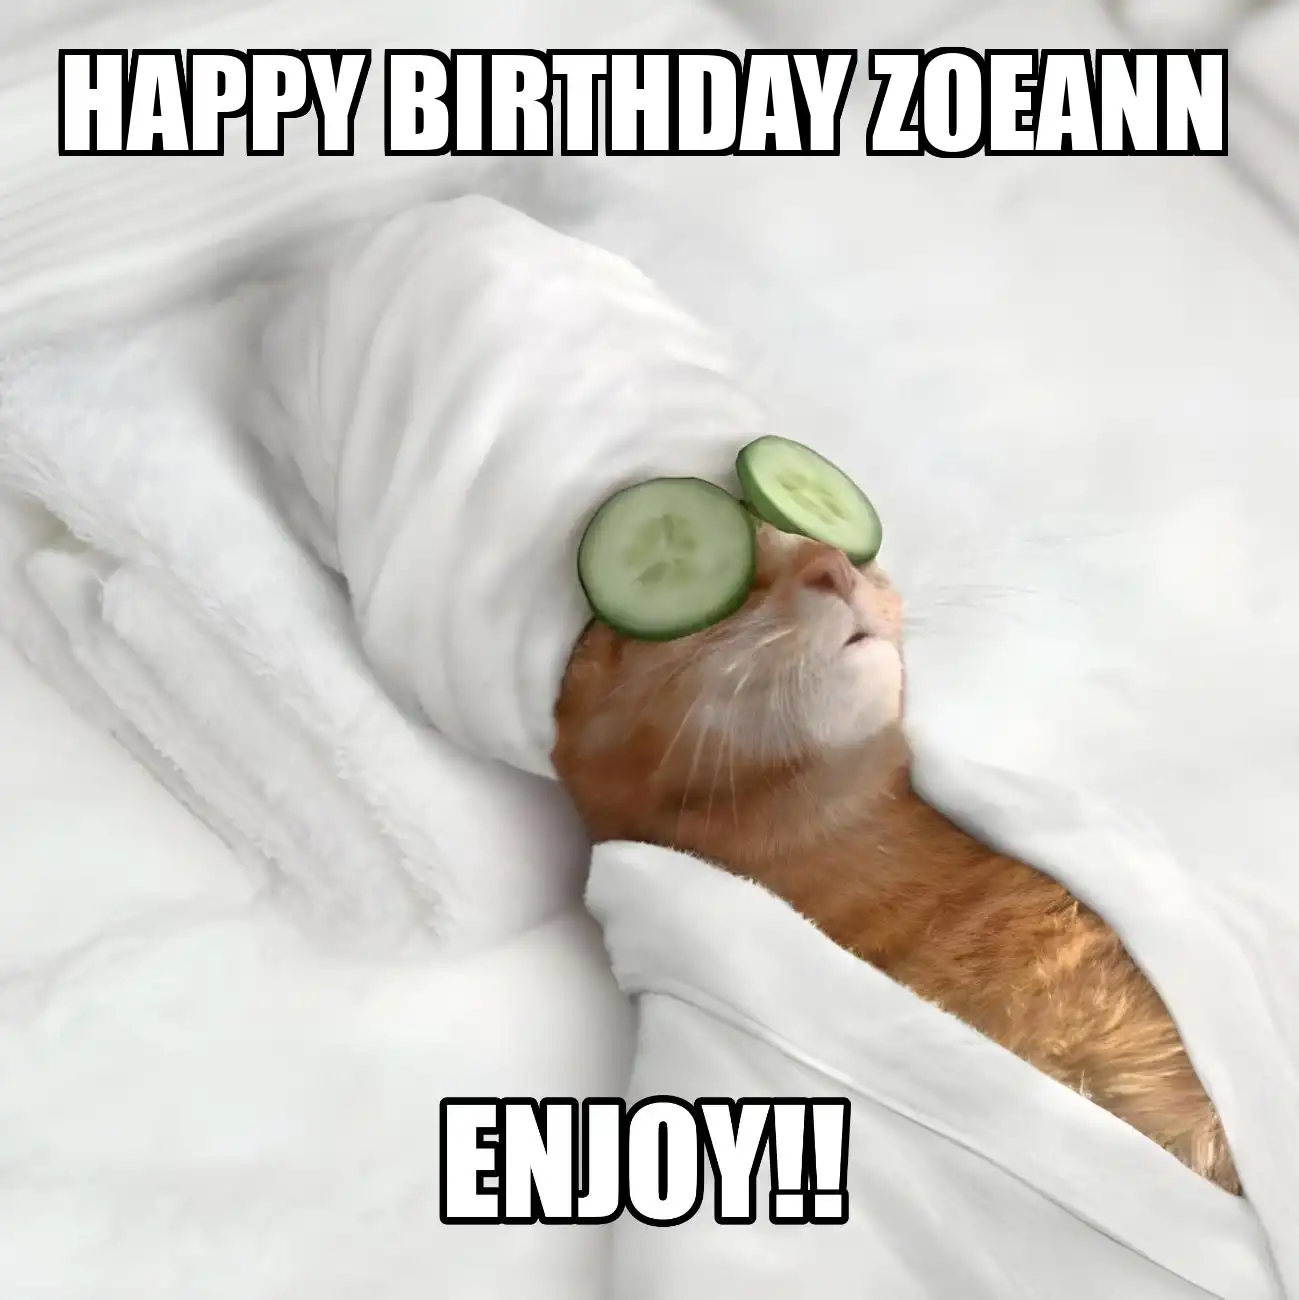 Happy Birthday Zoeann Enjoy Cat Meme